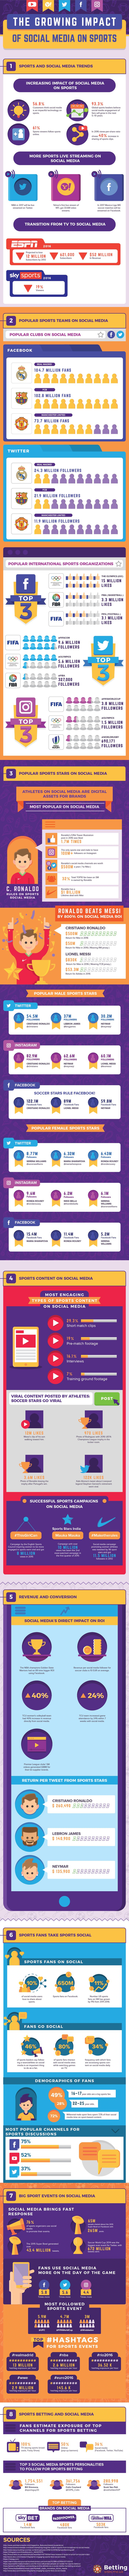 media-social-et-sport.png